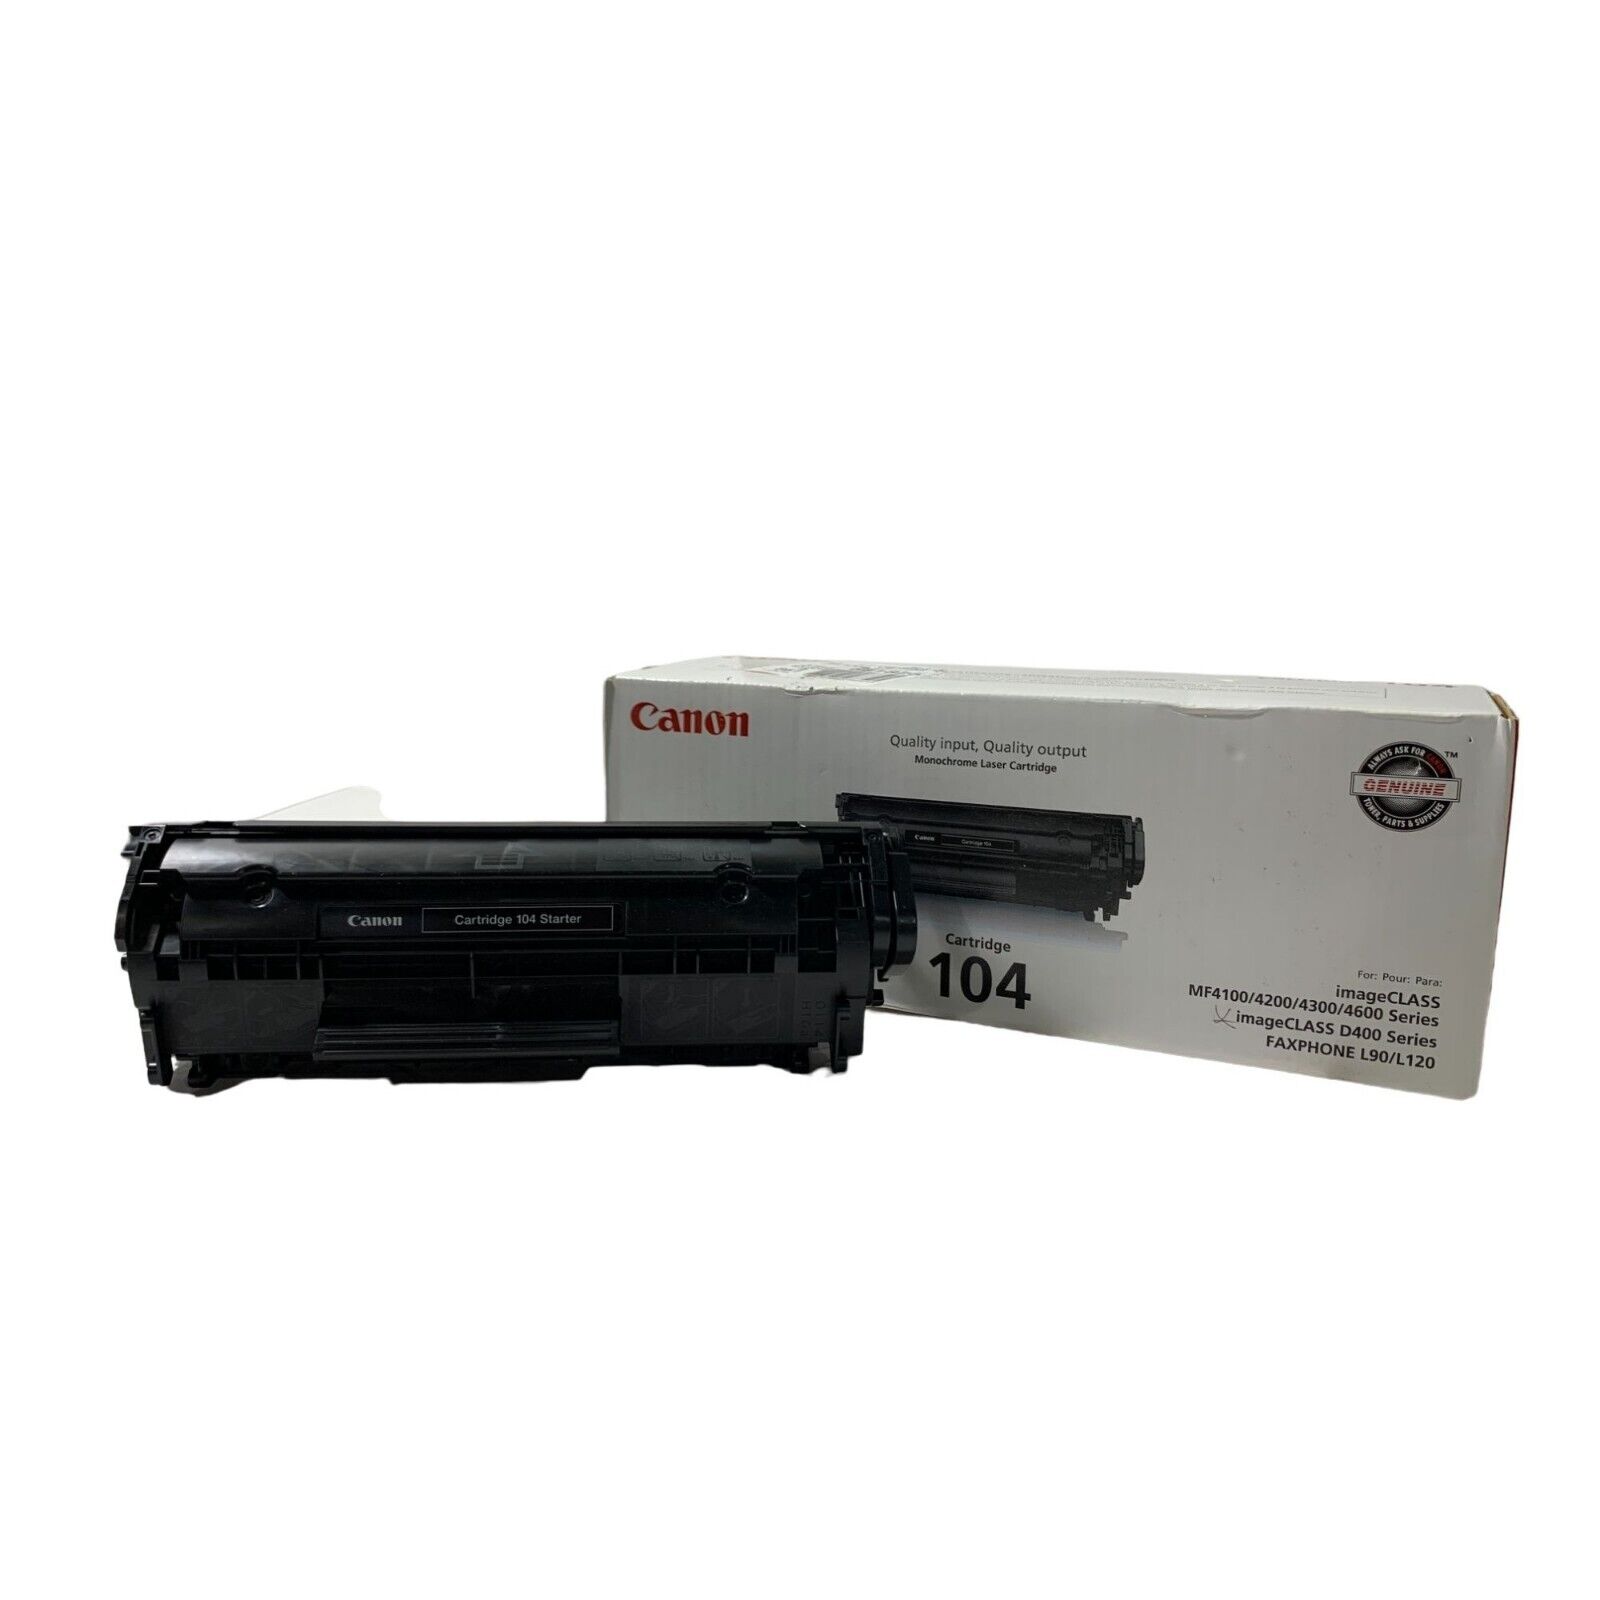 Canon 104 Laser Toner Cartridge - Black - 0263B001 - Ships Free